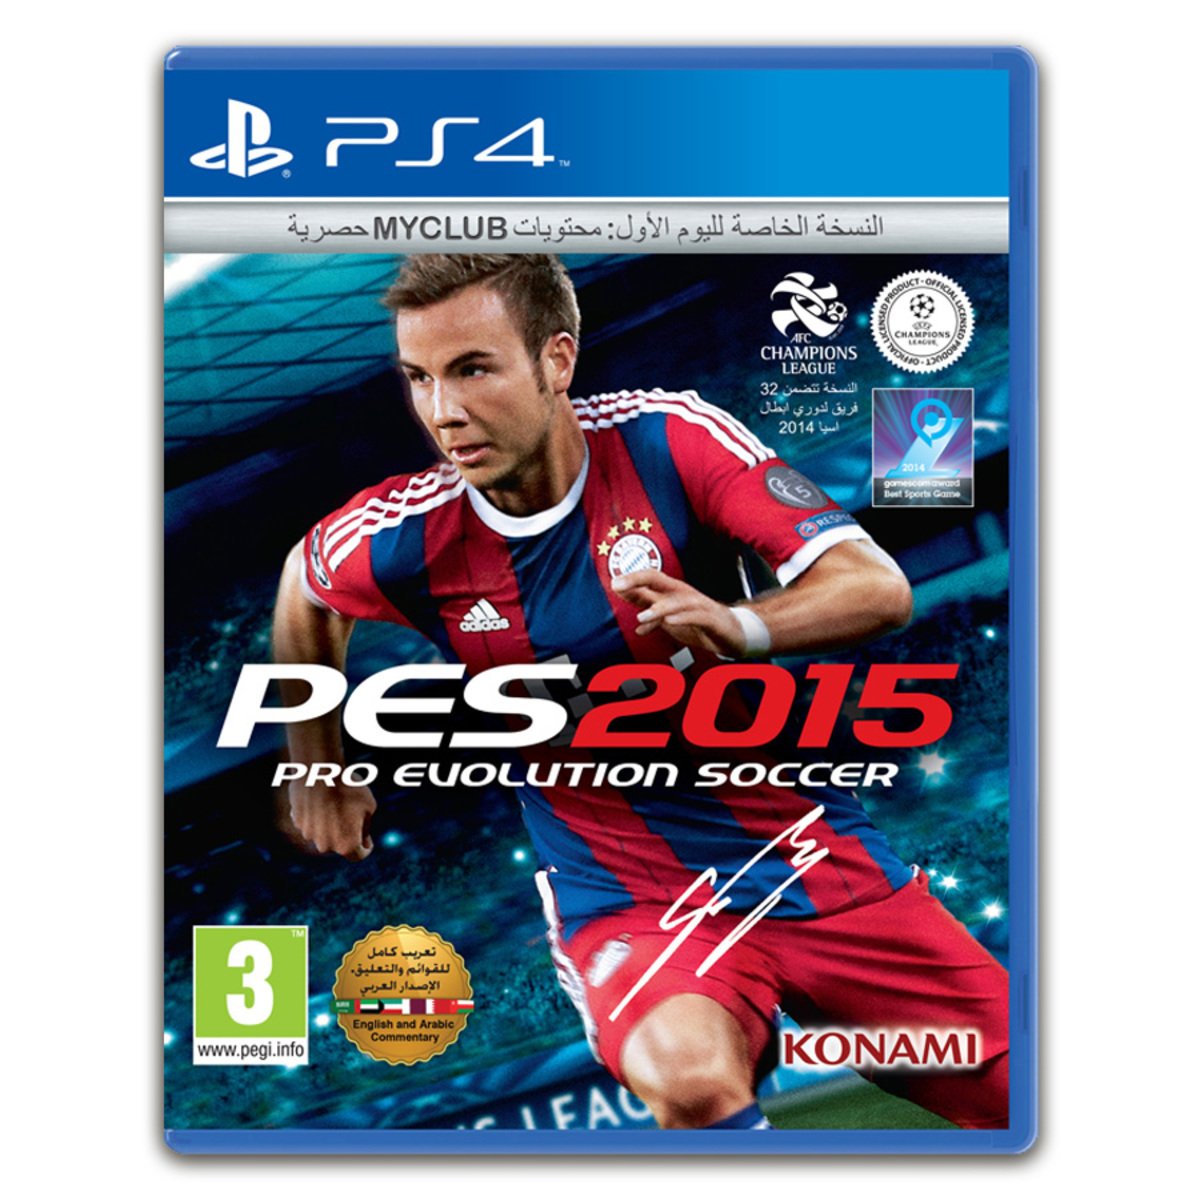 PS4 Pro Evolution Soccer 2015